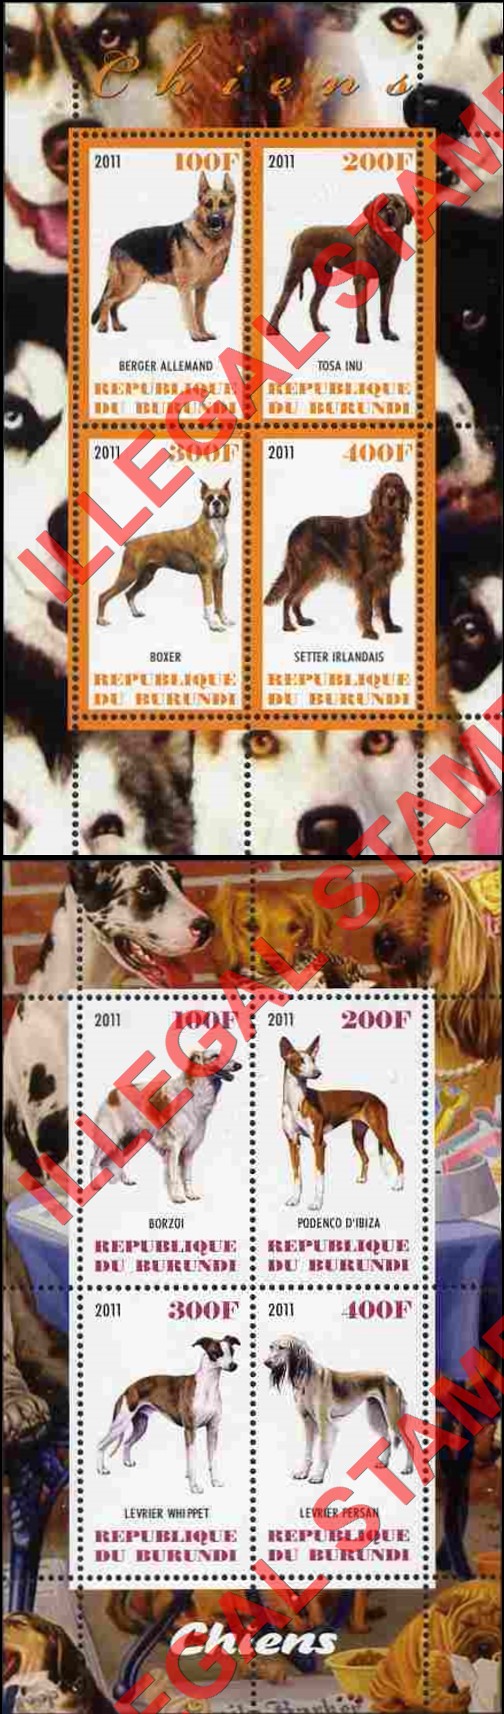 Burundi 2011 Dogs Counterfeit Illegal Stamp Souvenir Sheet of 4 (Part 1)